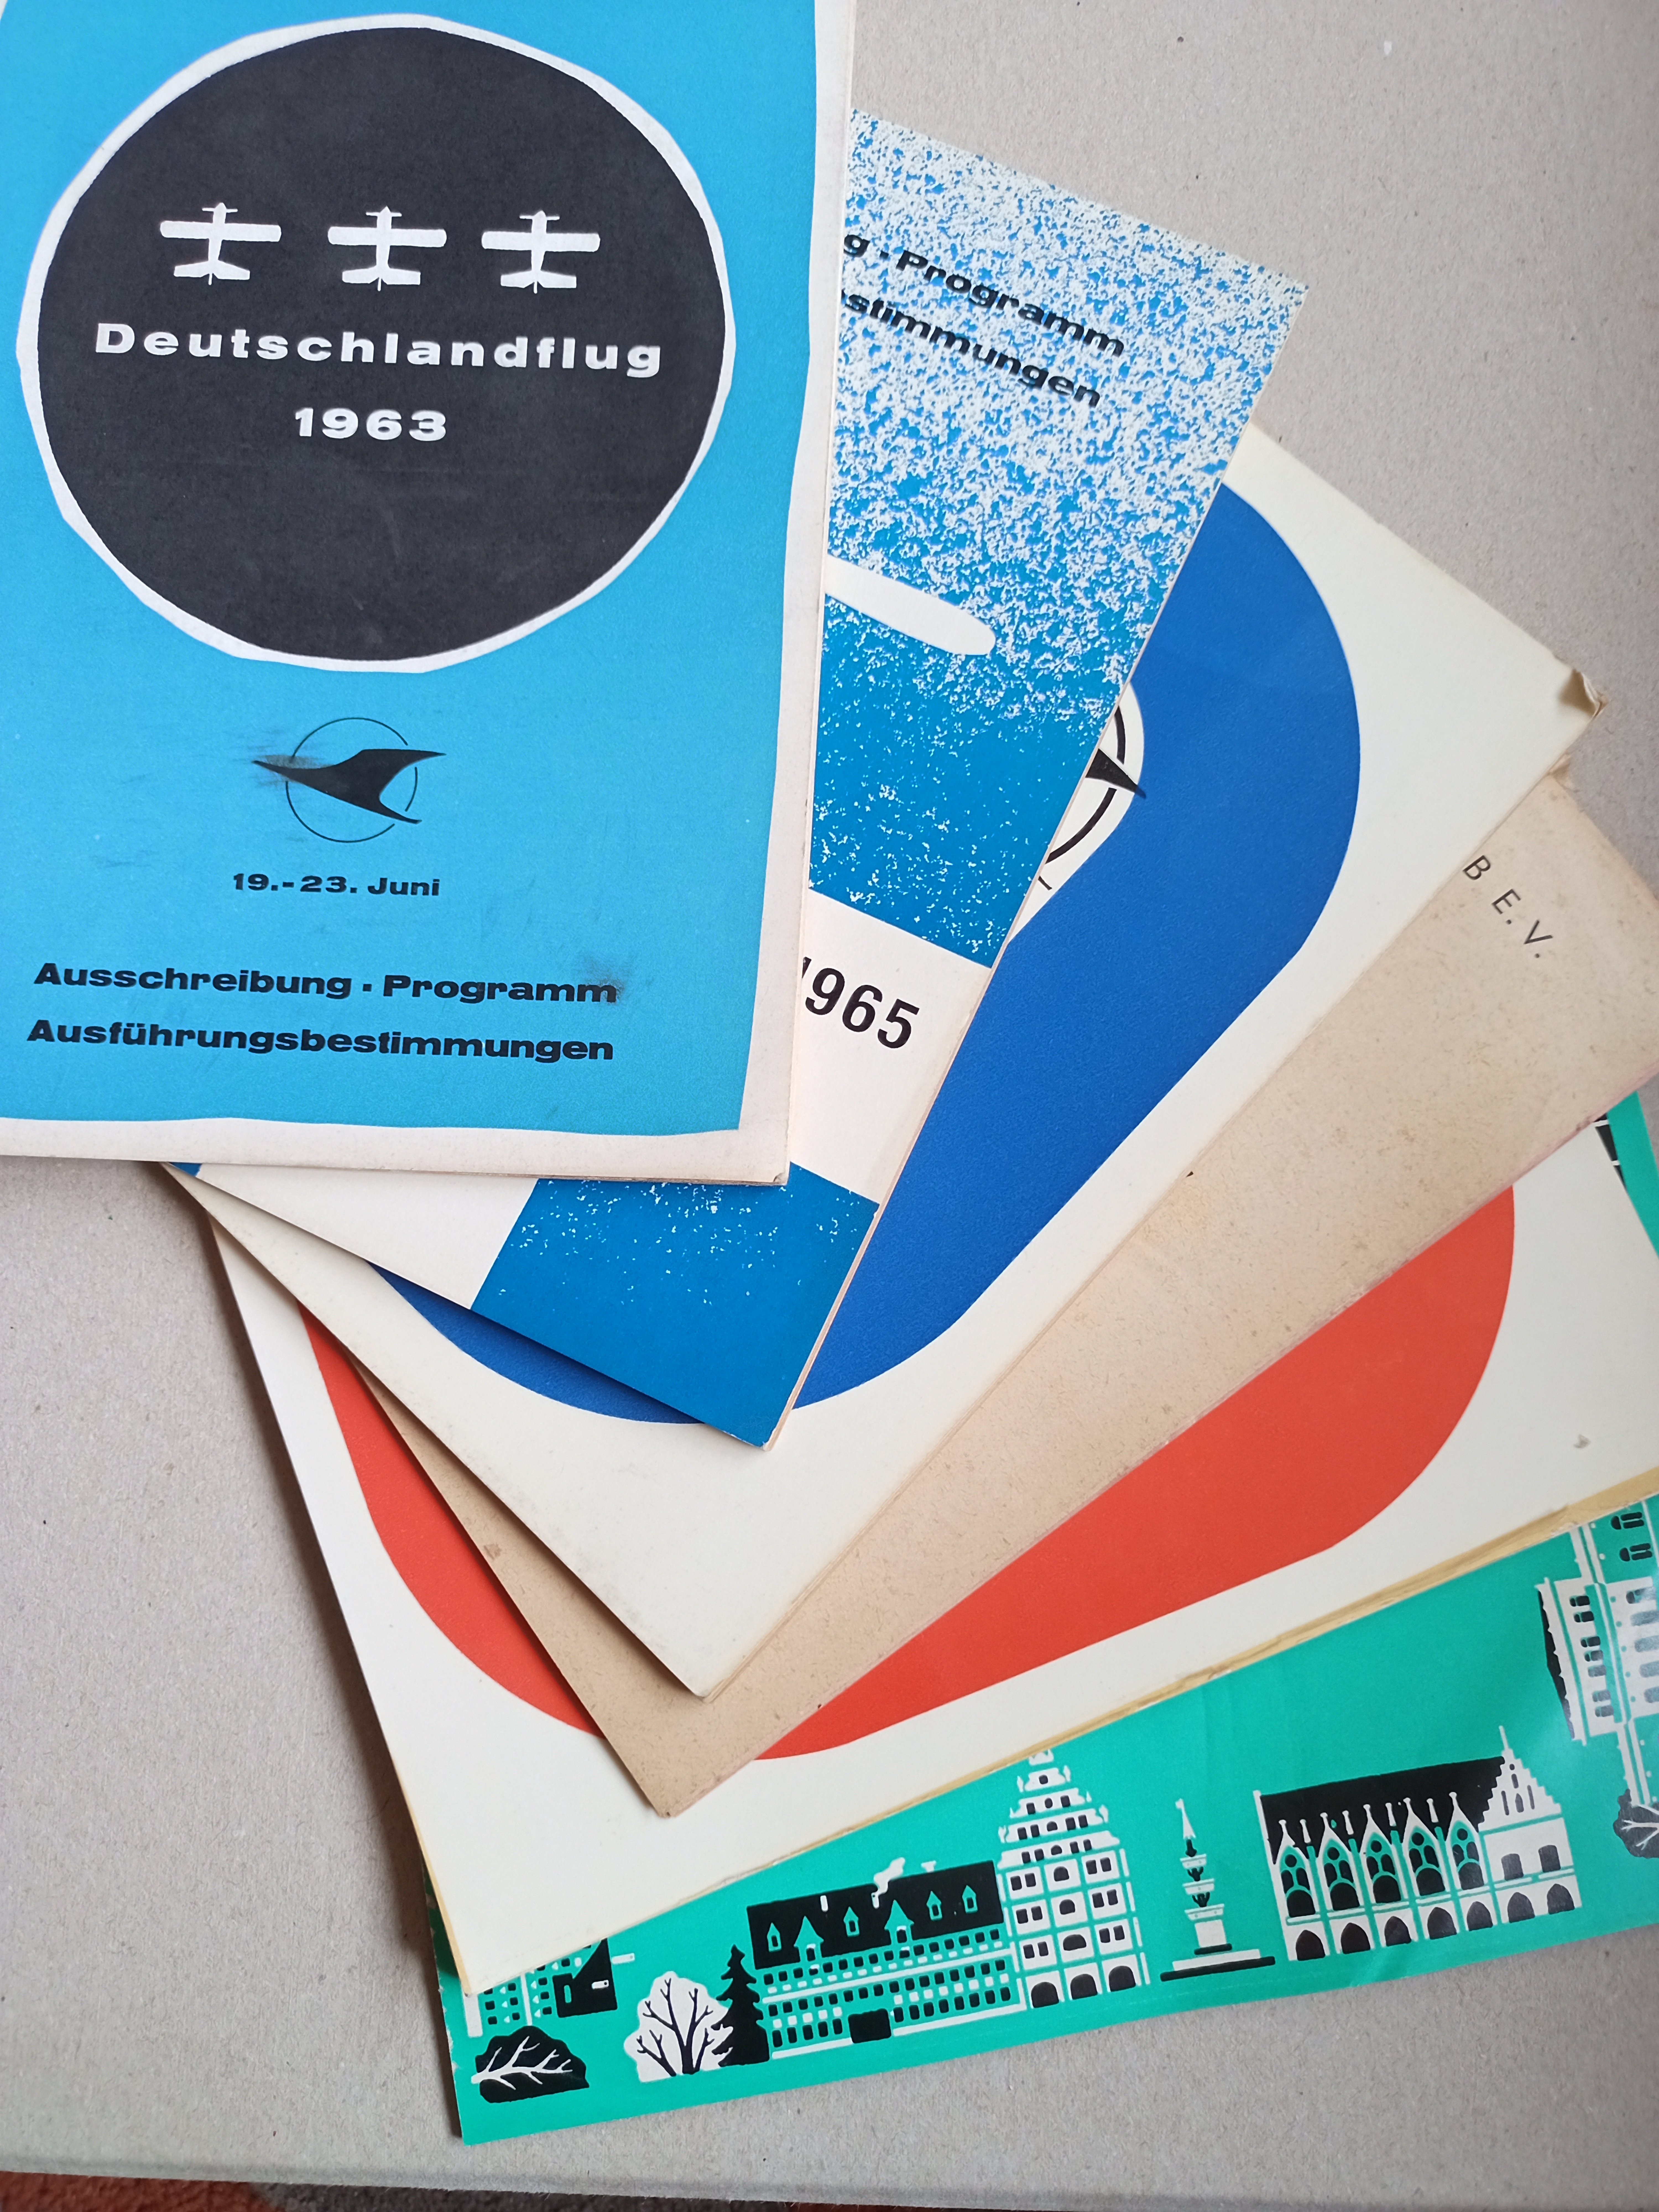 Deutschlandflug 1963 - 1965 - 1967 - 1969 (Deutsches Segelflugmuseum mit Modellflug CC BY-NC-SA)